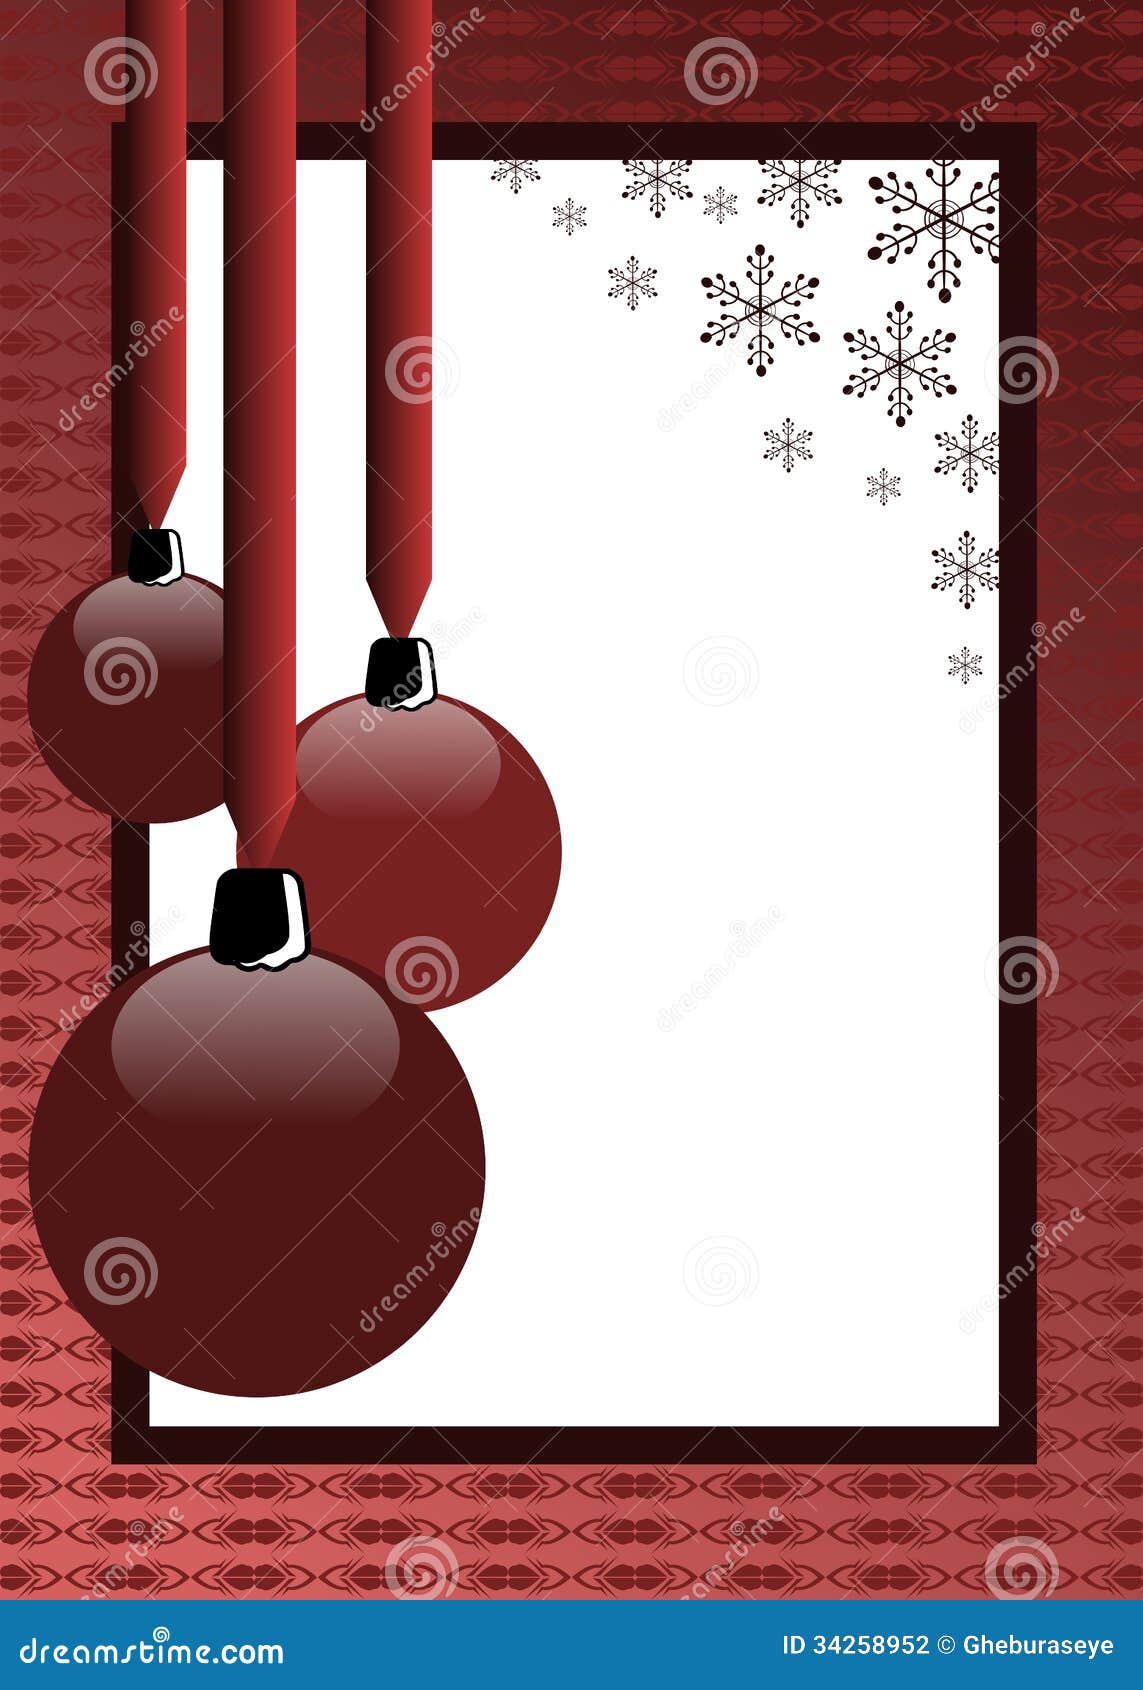 Christmas Greeting Card Stock Photography - Image: 34258952